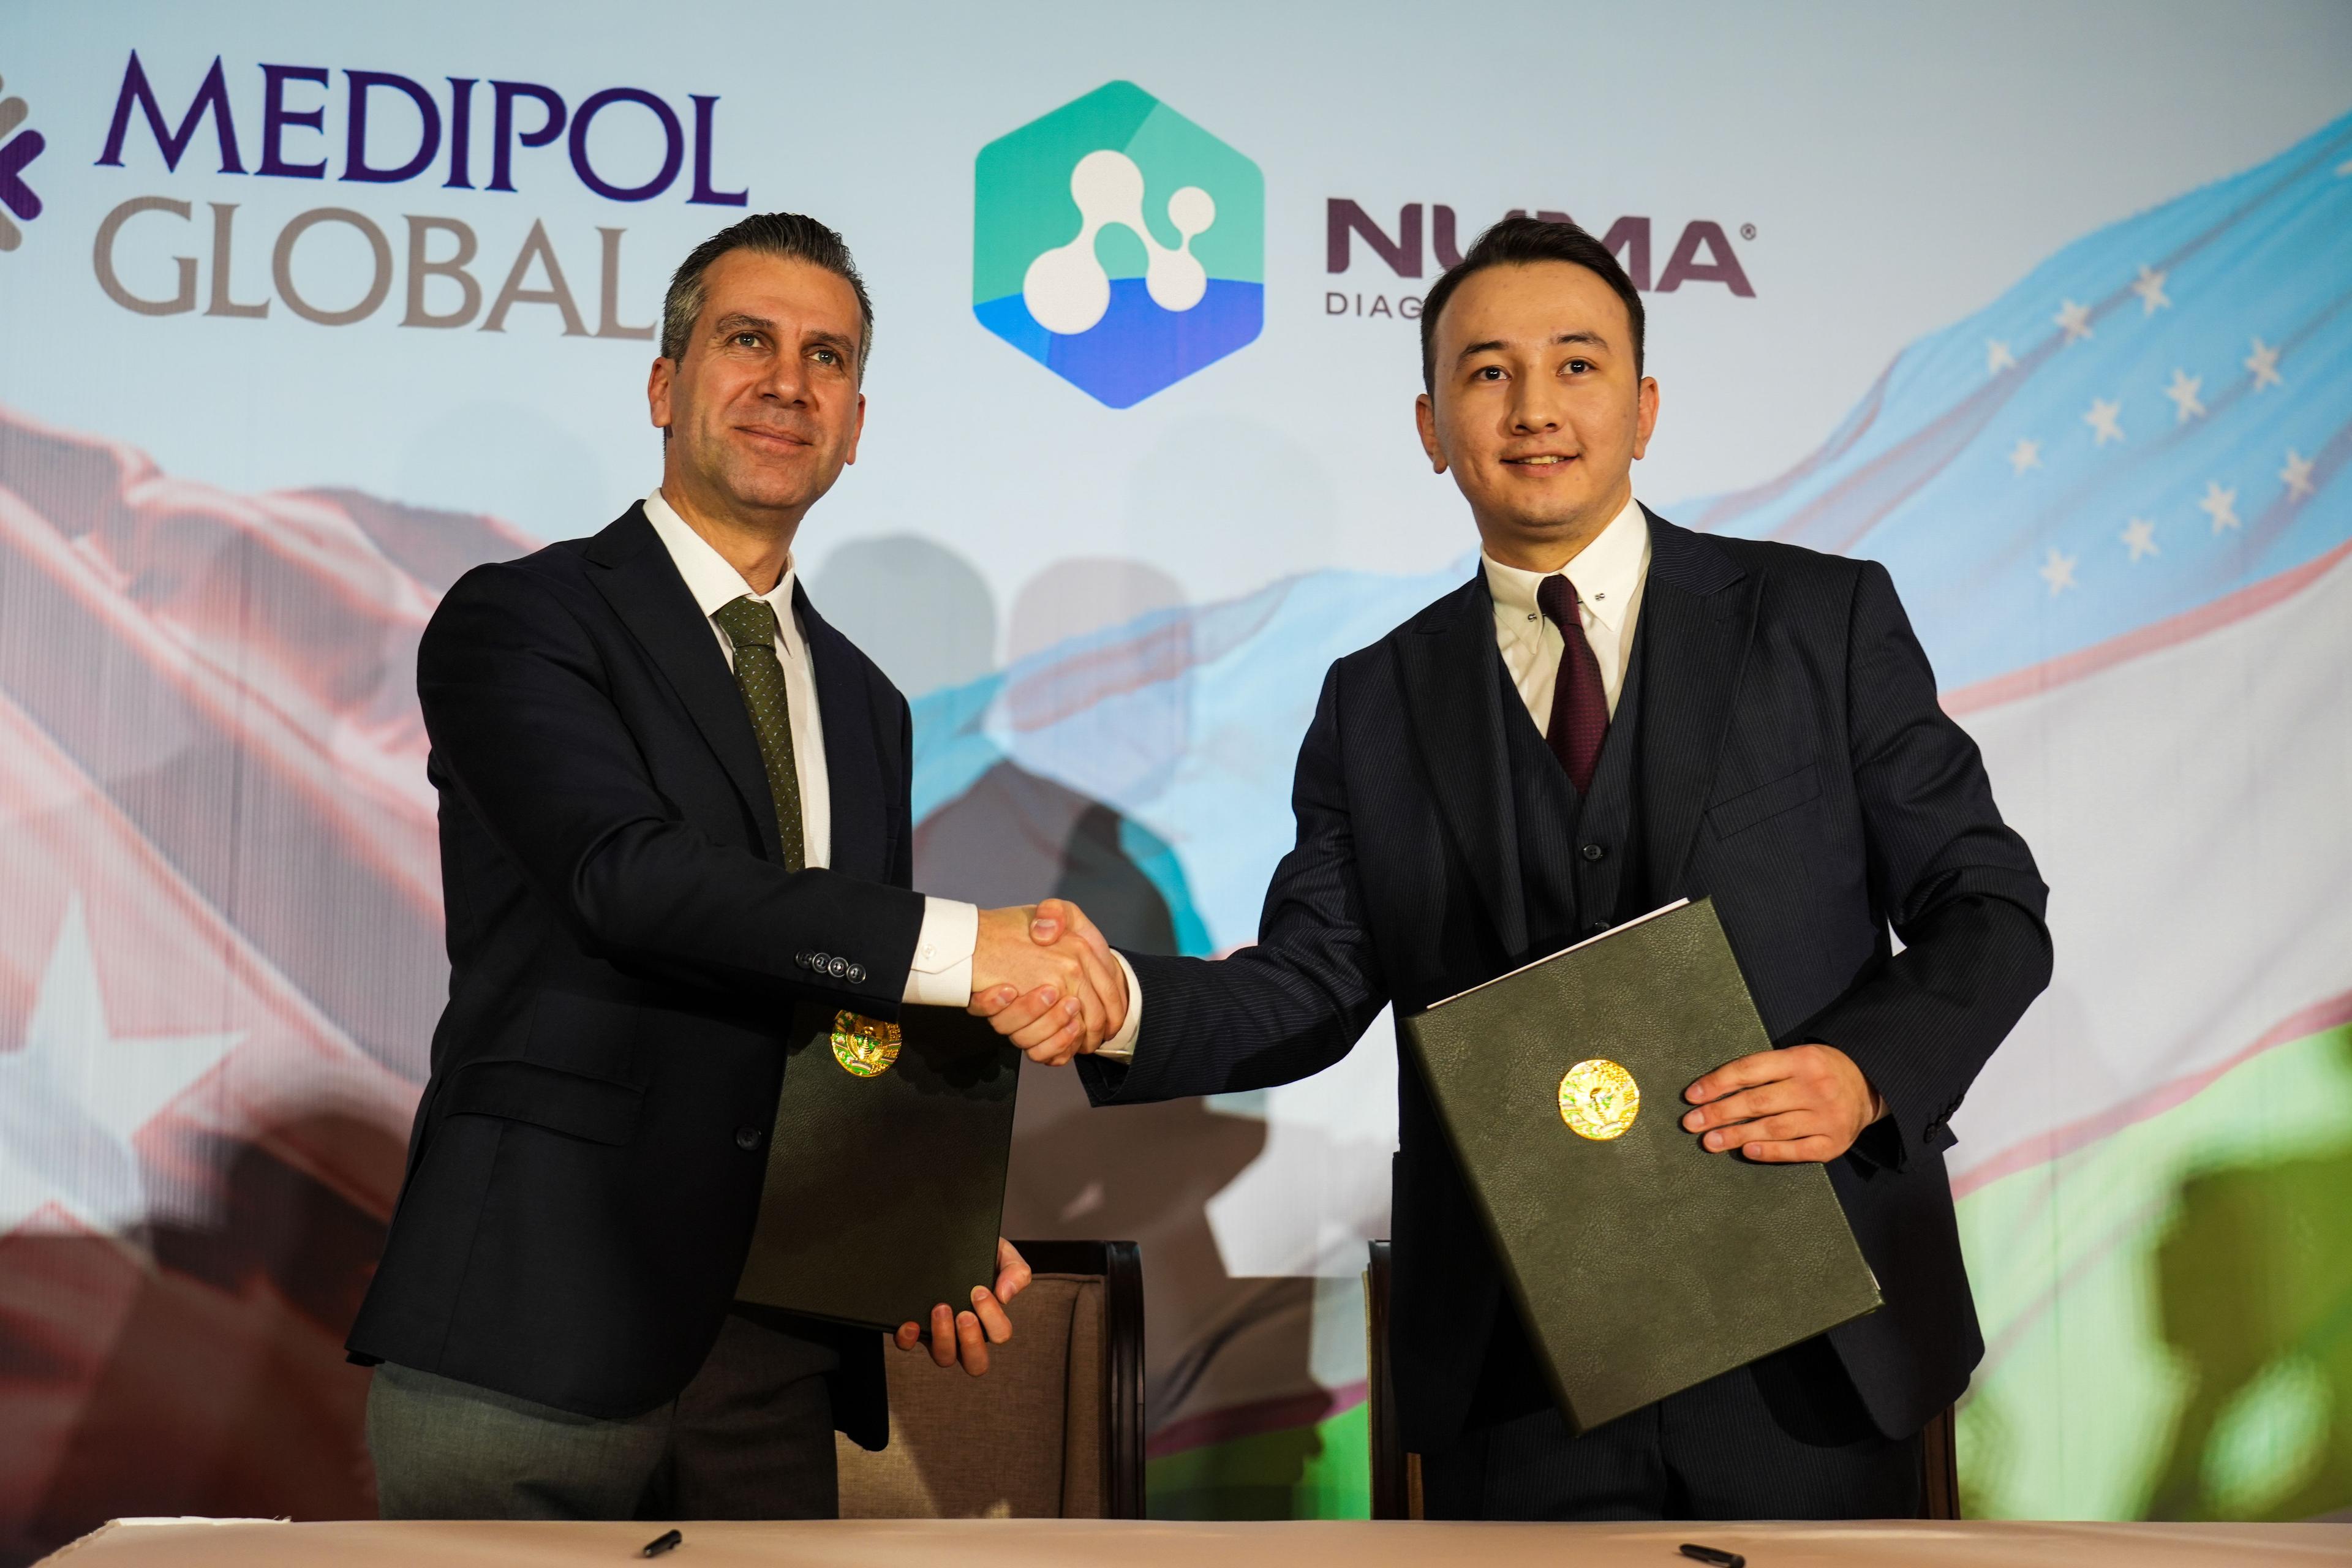 Numa diagnostics и Medipol подписали меморандум о сотрудничестве